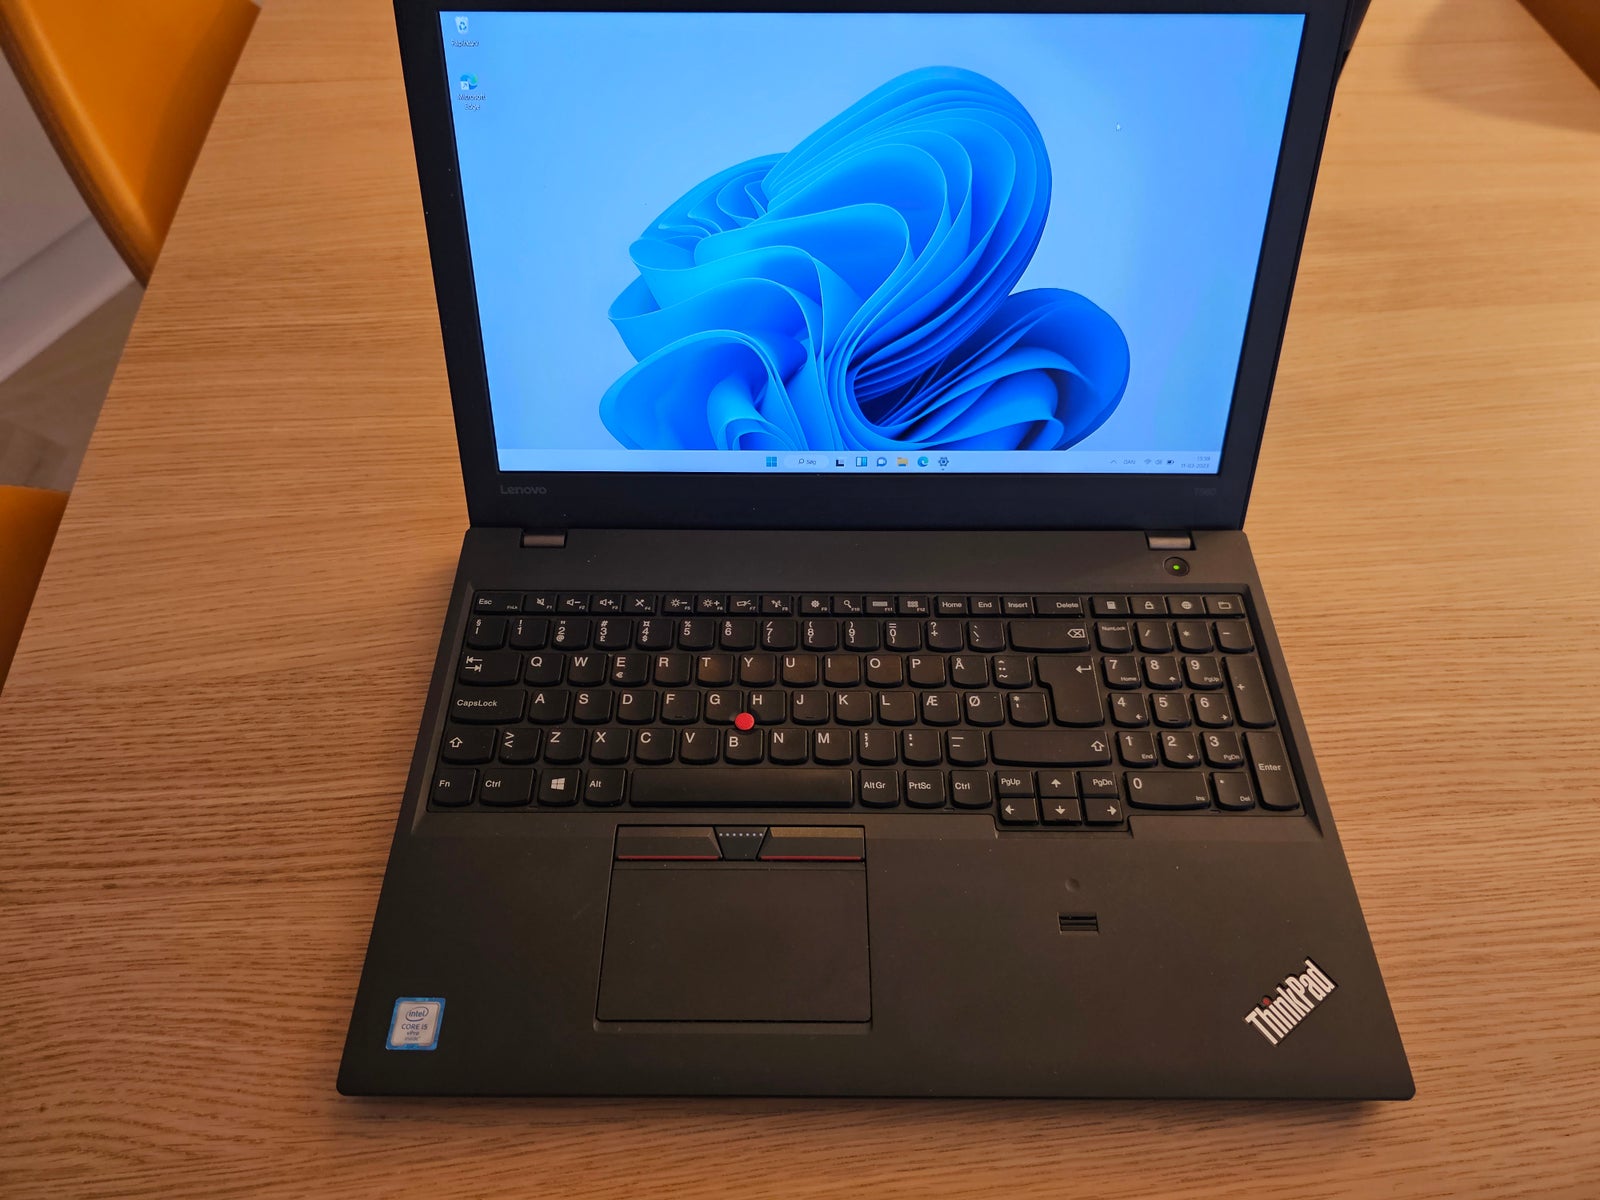 Lenovo ThinkPad T560, Intel Core i5-6200U 2,3GHz-2.5Hz